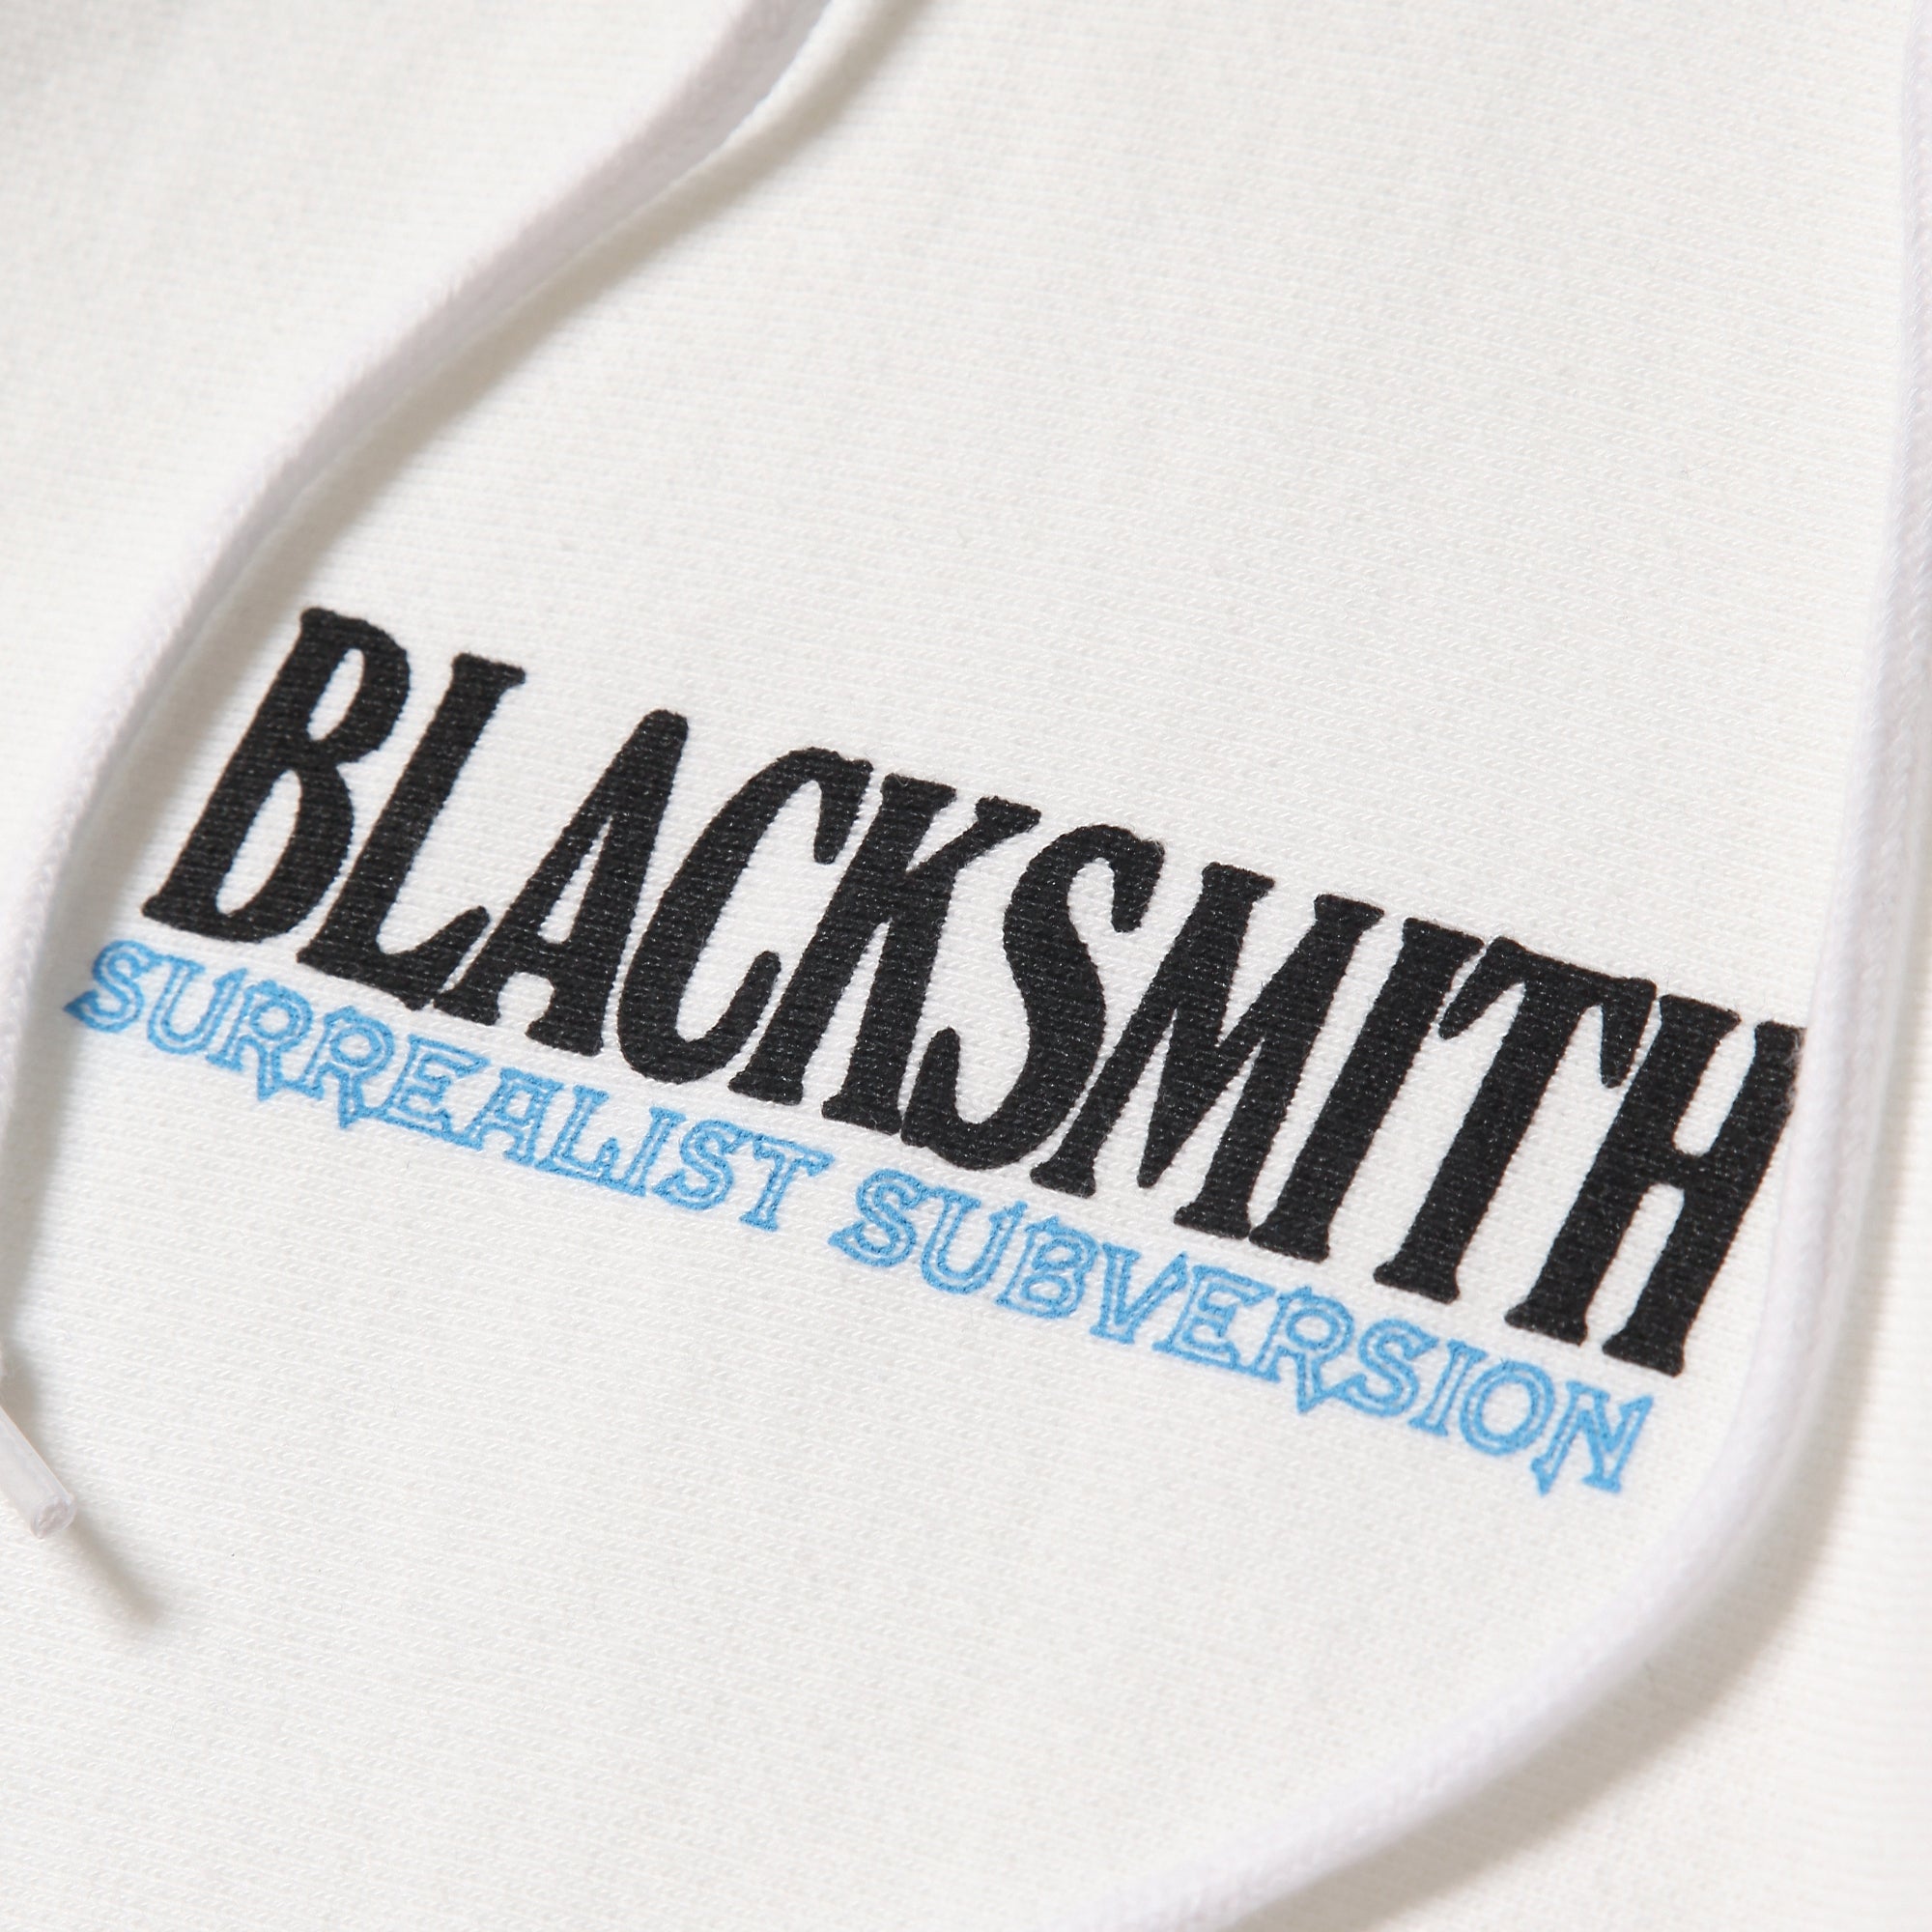 Blacksmith - Surrealist Subversion Hoodie - White